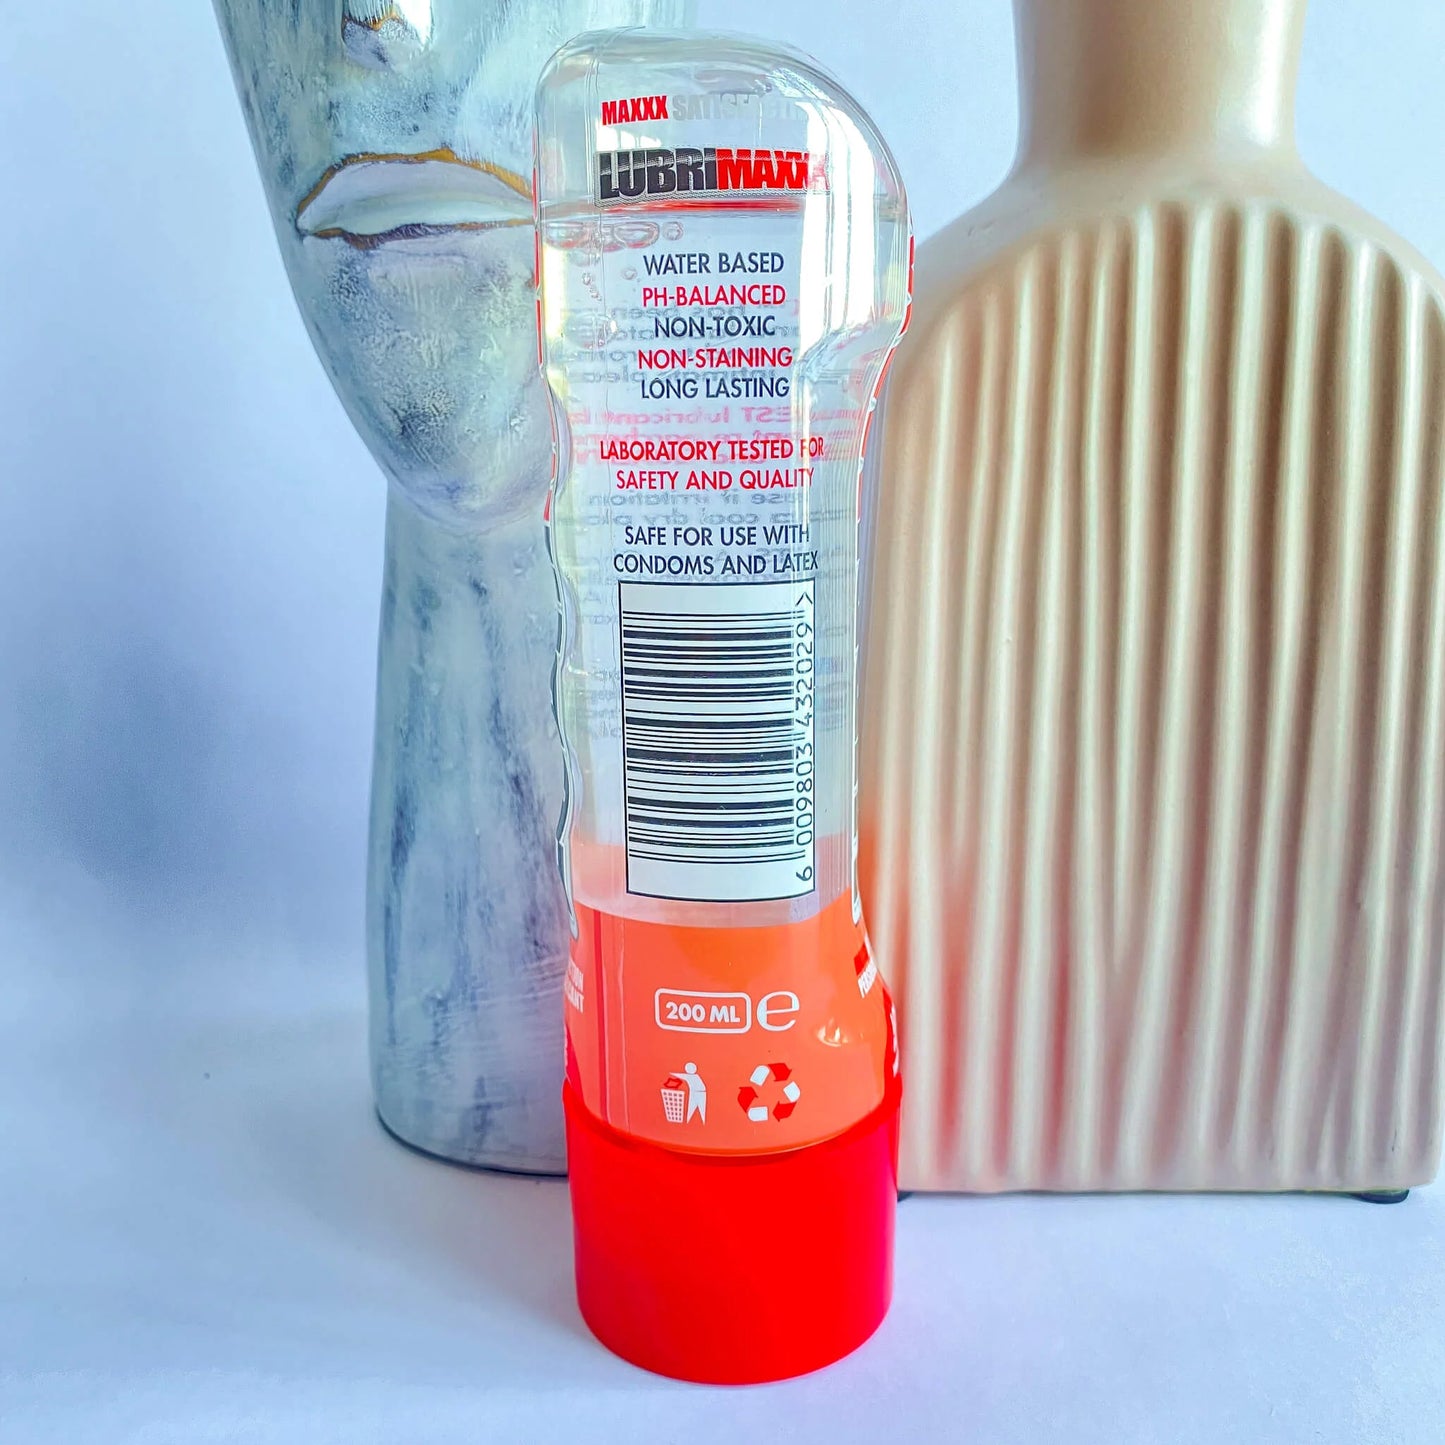 Lubrimaxx Personal Lube Strawberry Flavour Bottle (200ml)